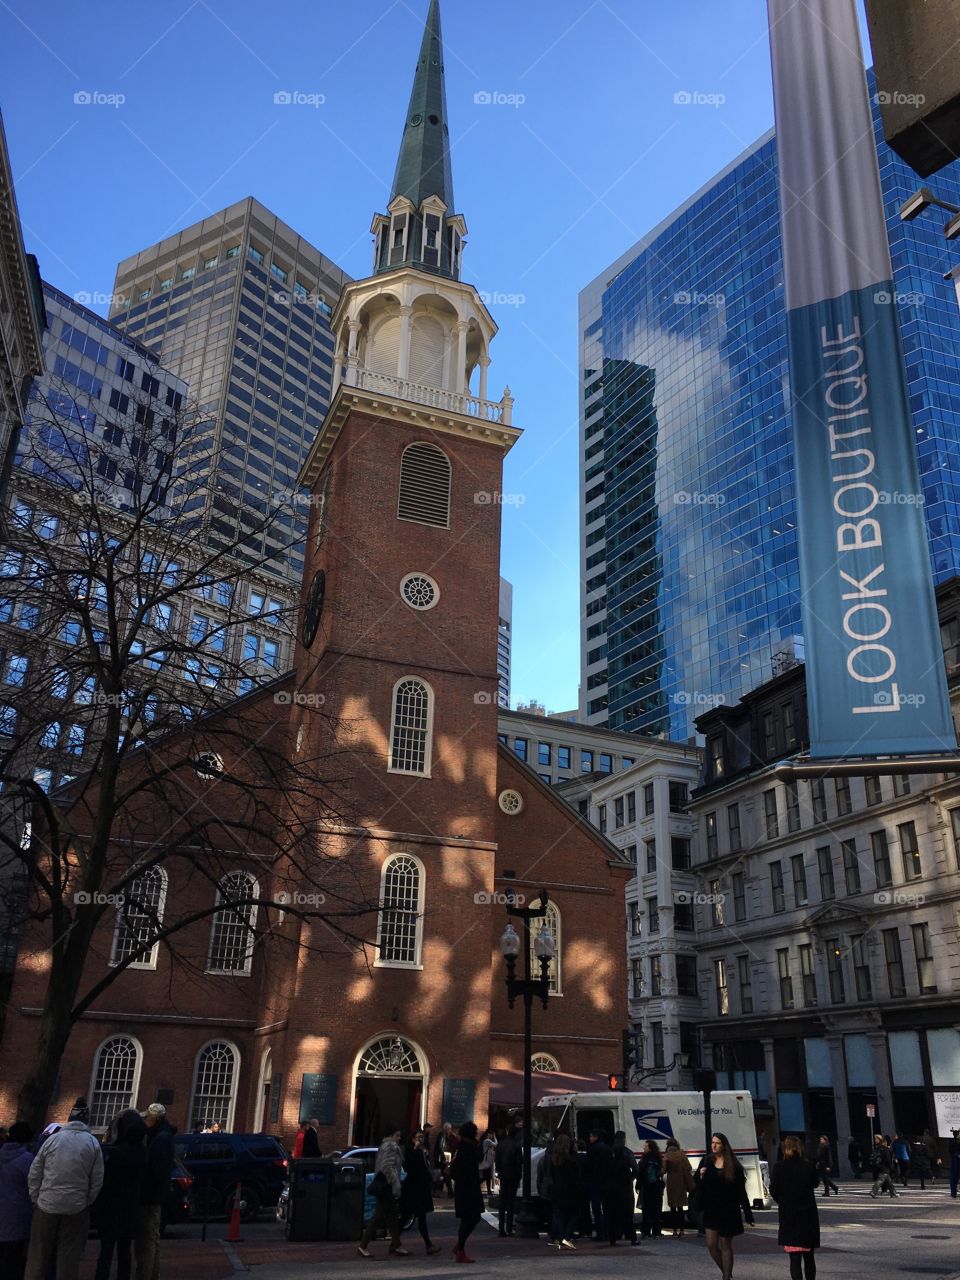 Old Boston church